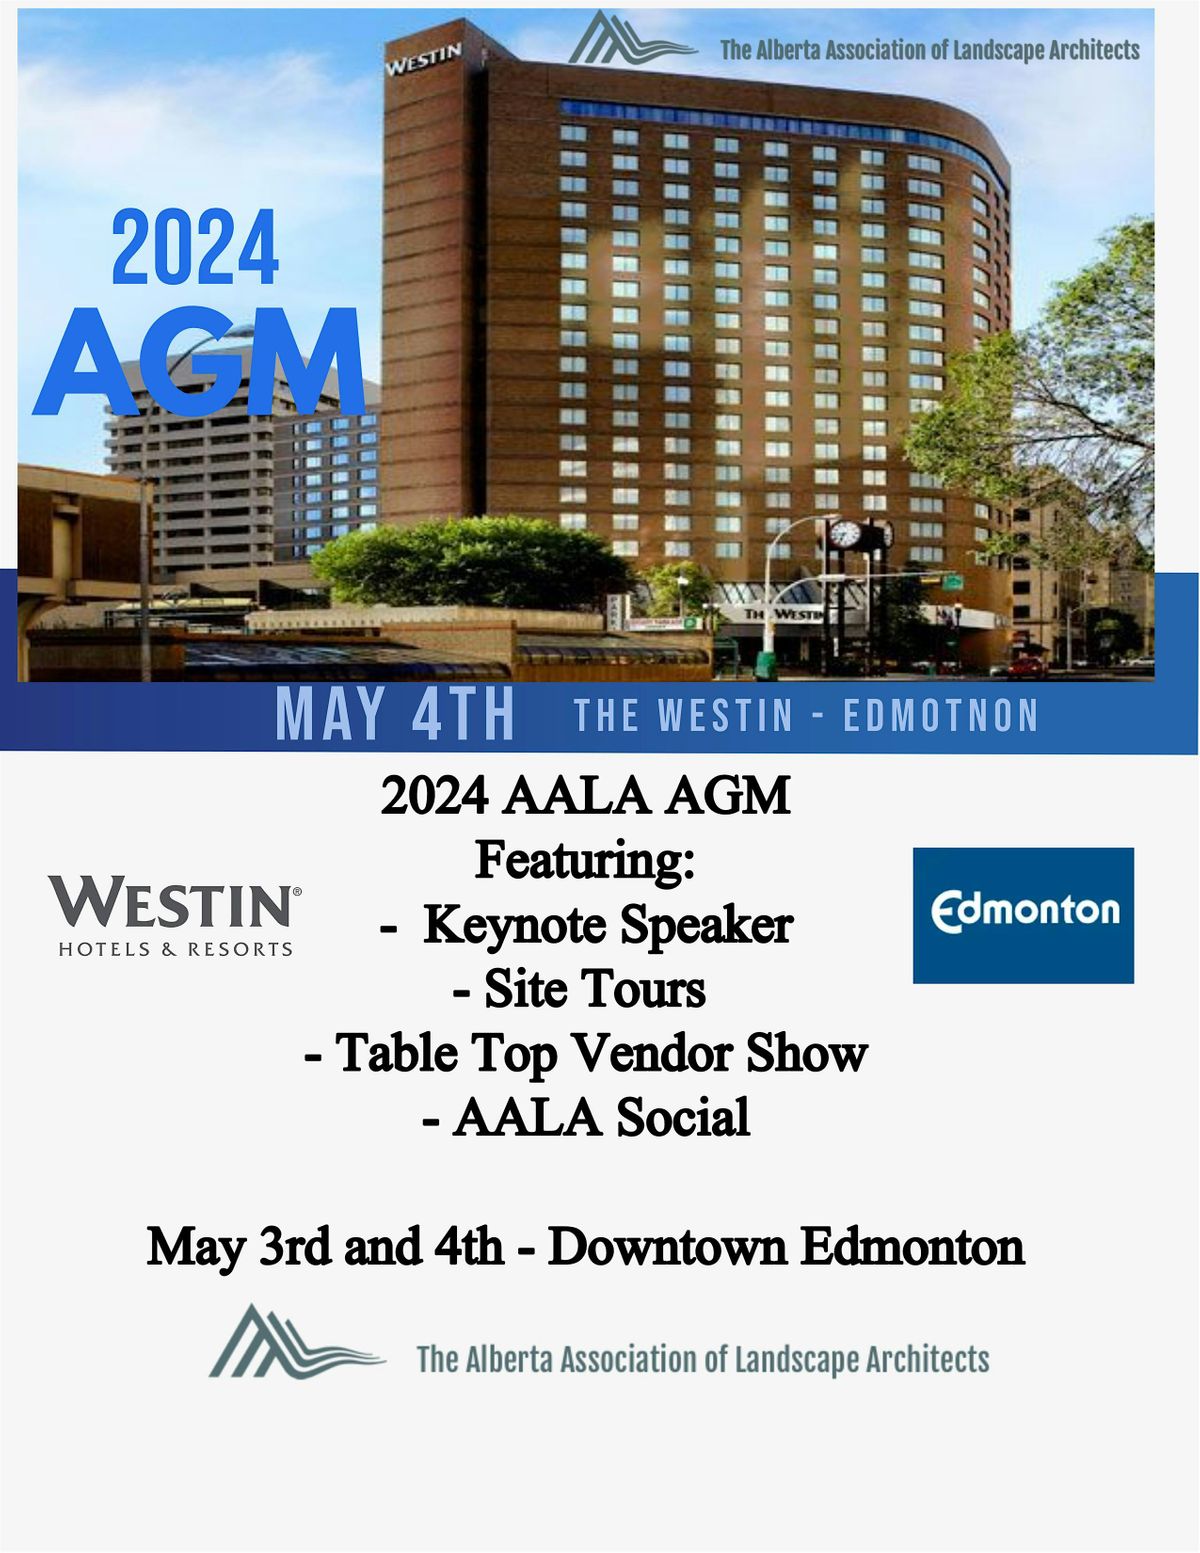 AALA Annual General Meeting 2024 - May 4th (Edmonton)